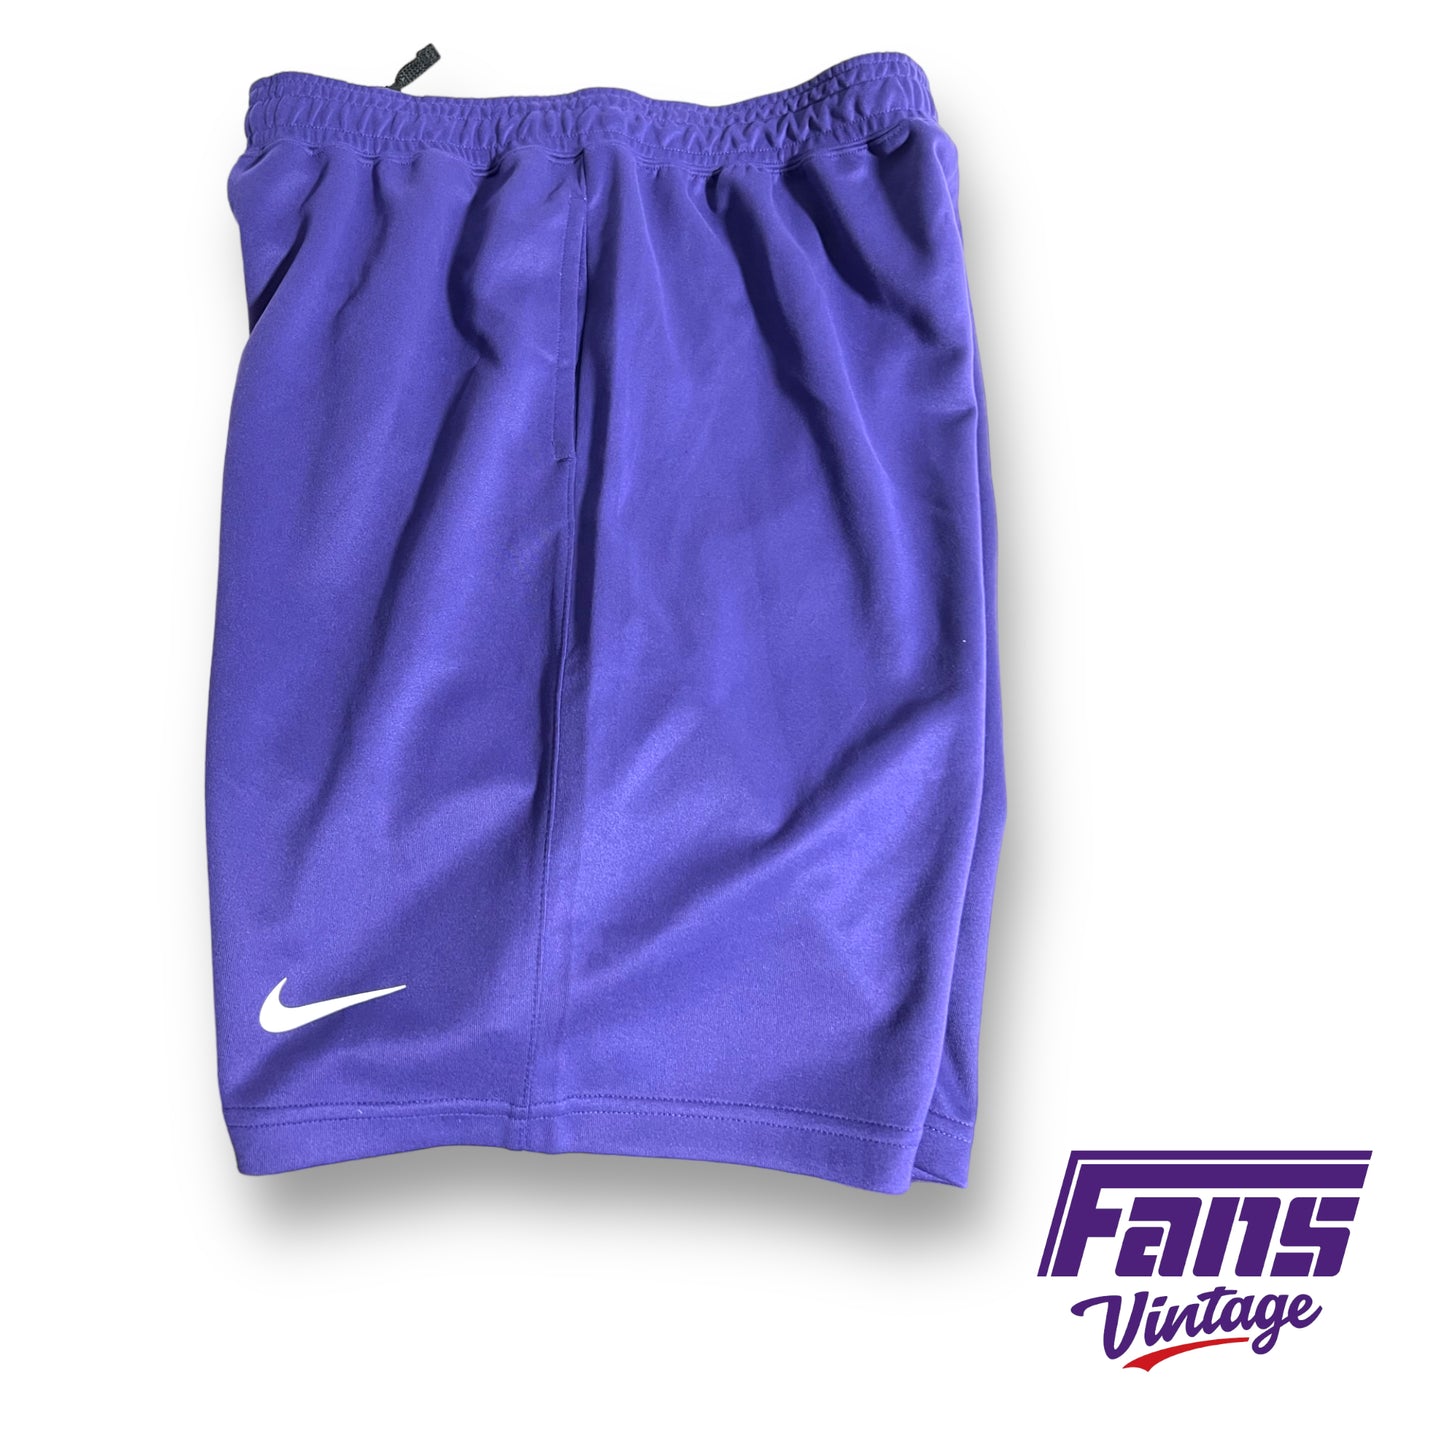 TCU team issued Premium Nike Tech Fleece therma-fit shorts